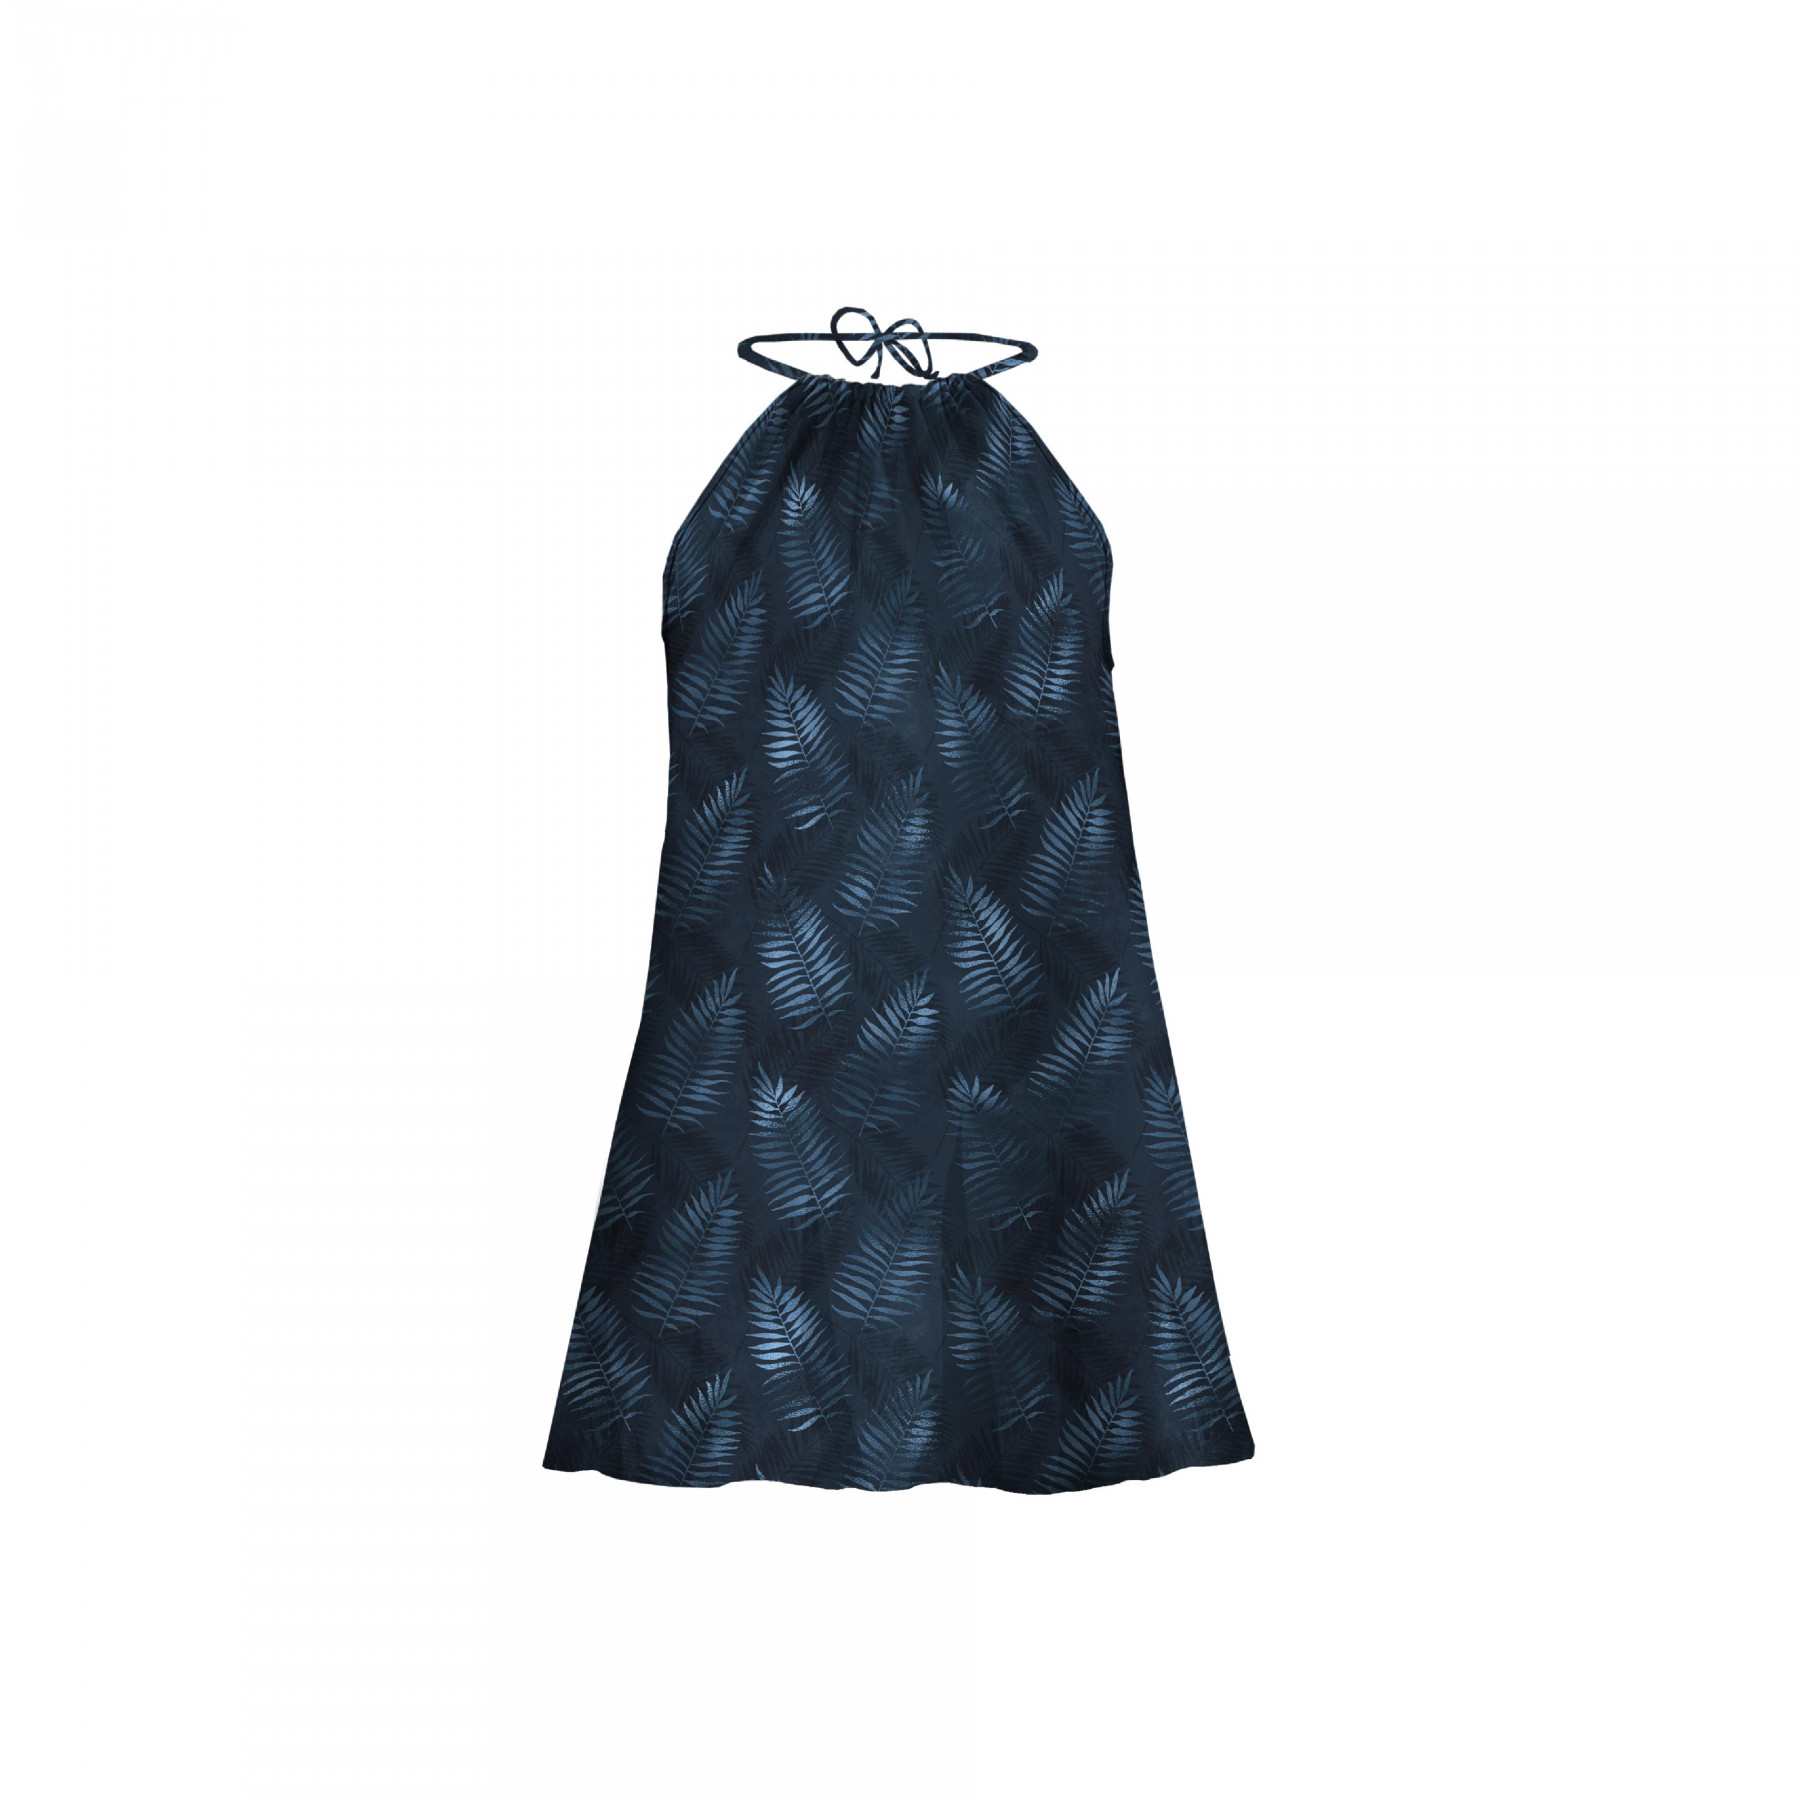 DRESS "DALIA" MINI - BLUE LEAVES WZ. 2 - sewing set